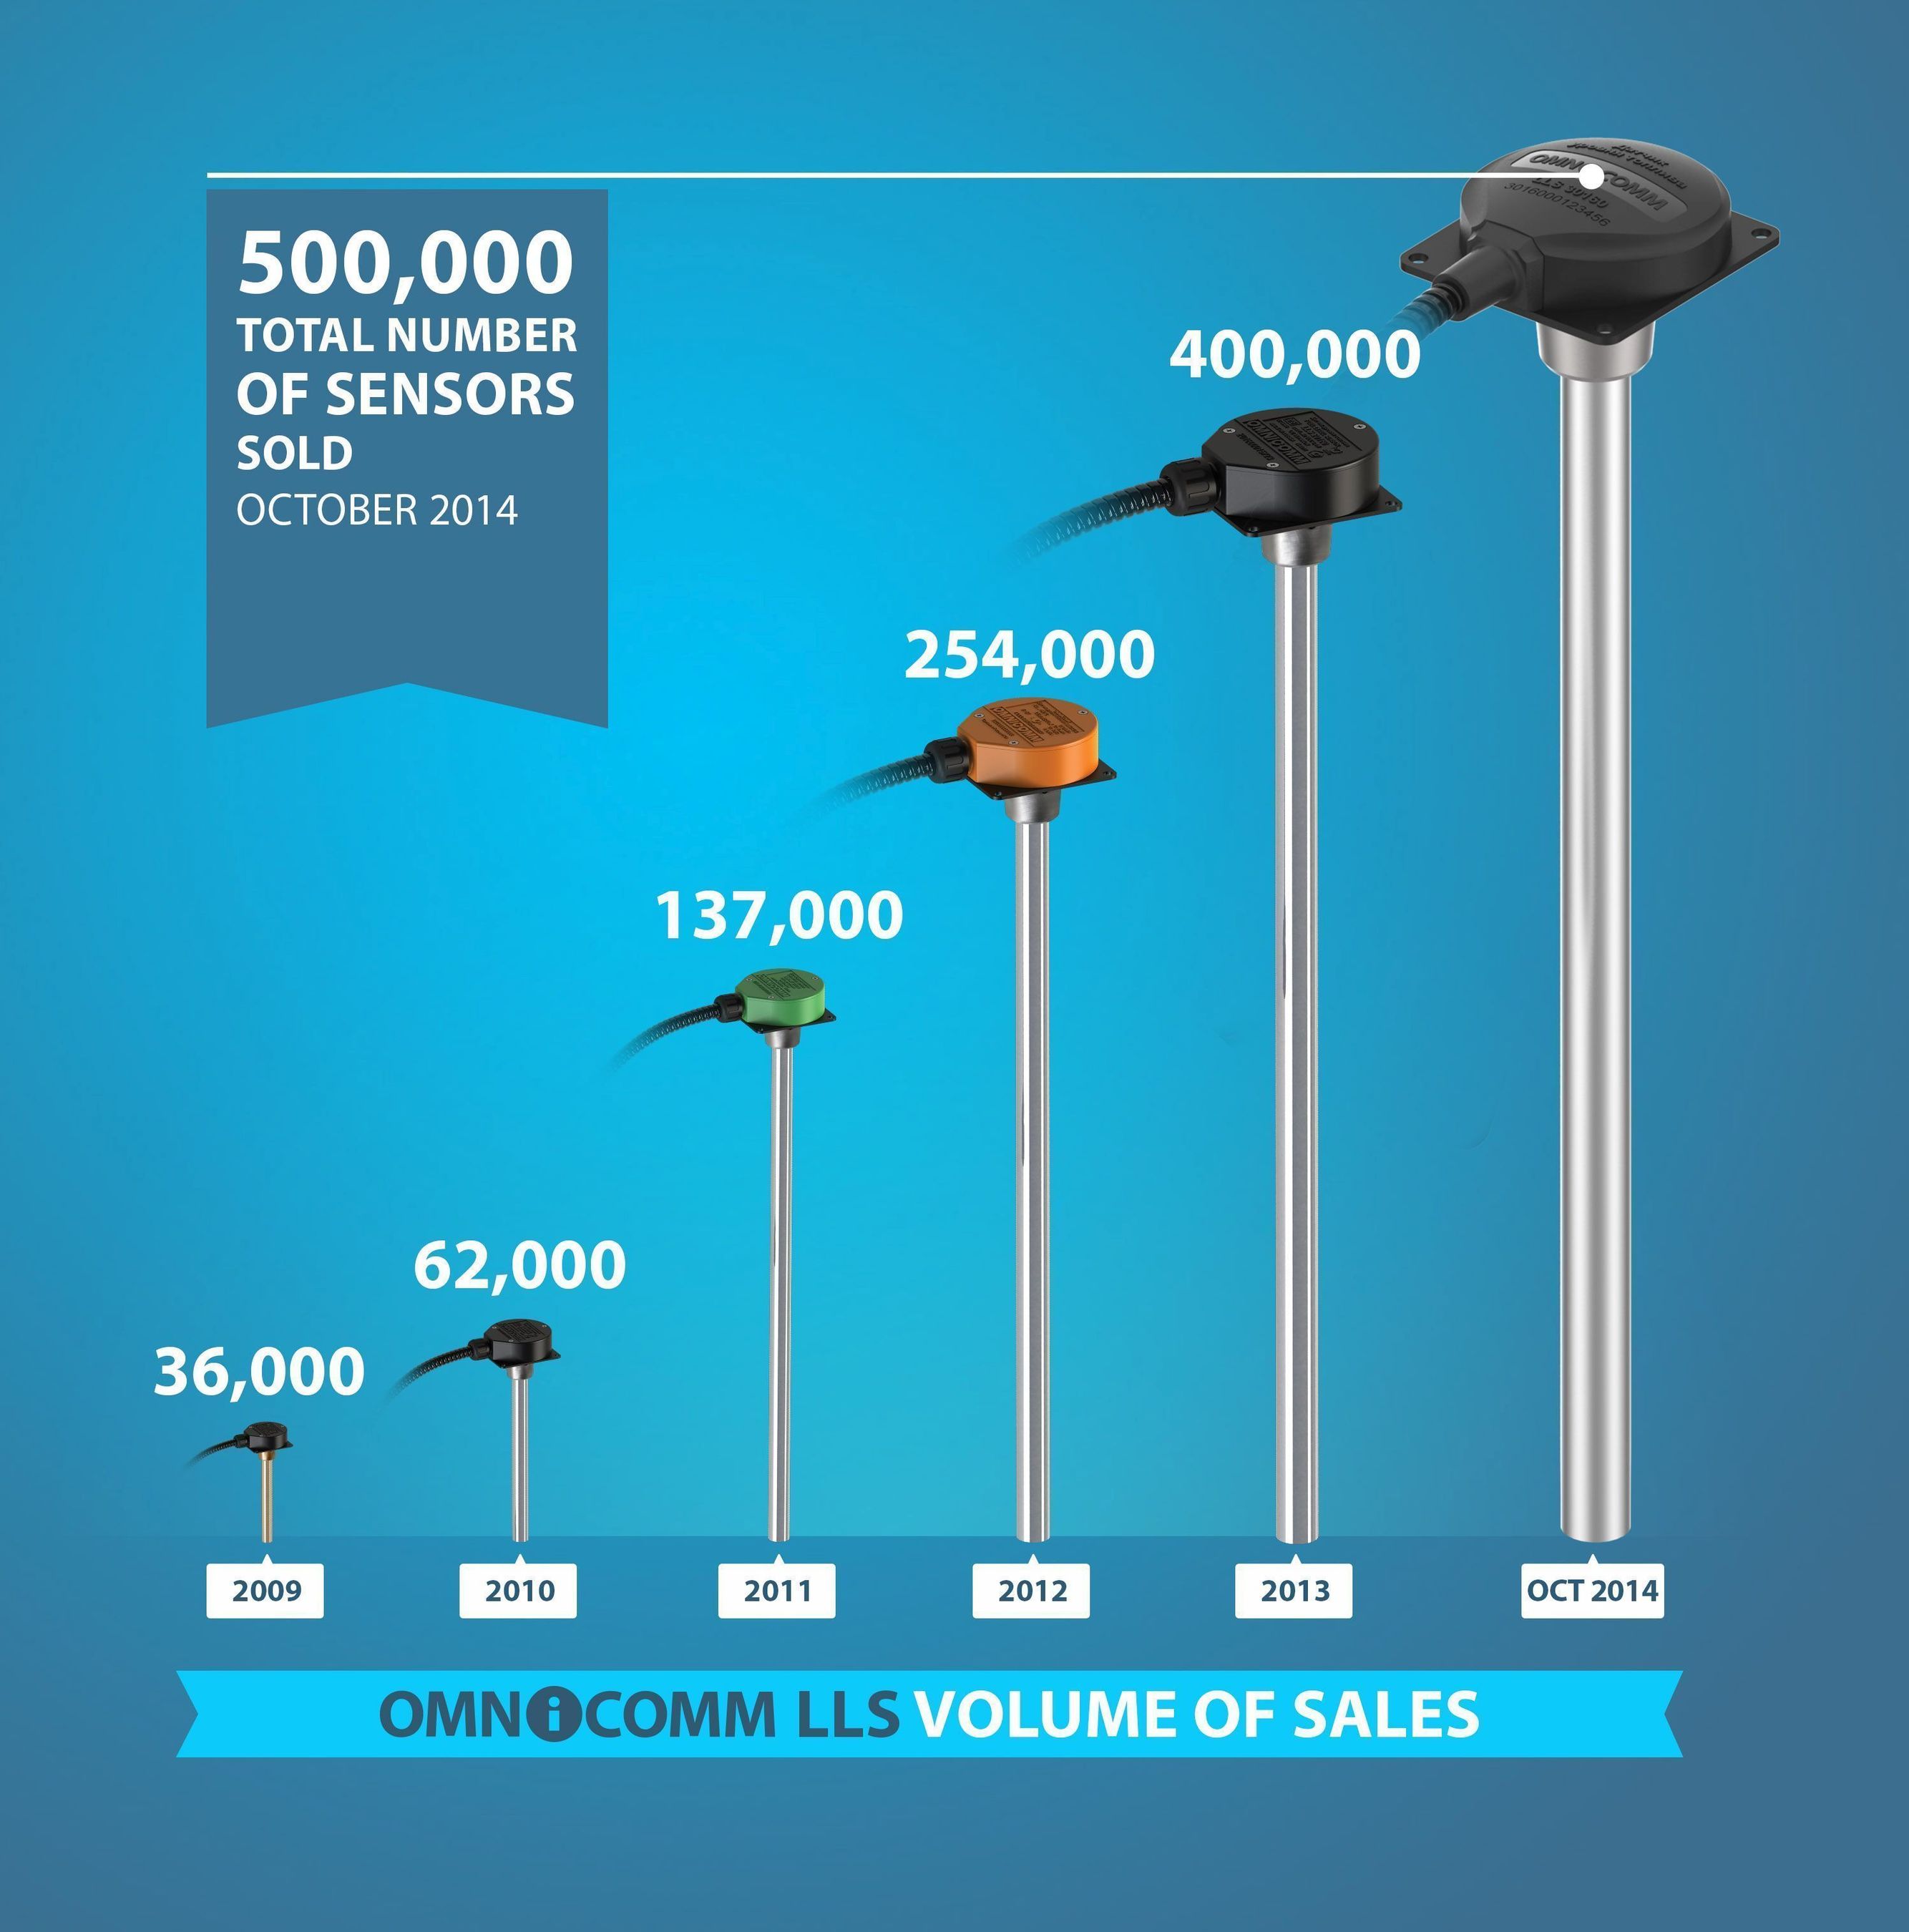 500,000 fuel level sensors Omnicomm LLS sold by October 2014 (PRNewsFoto/Omnicomm)